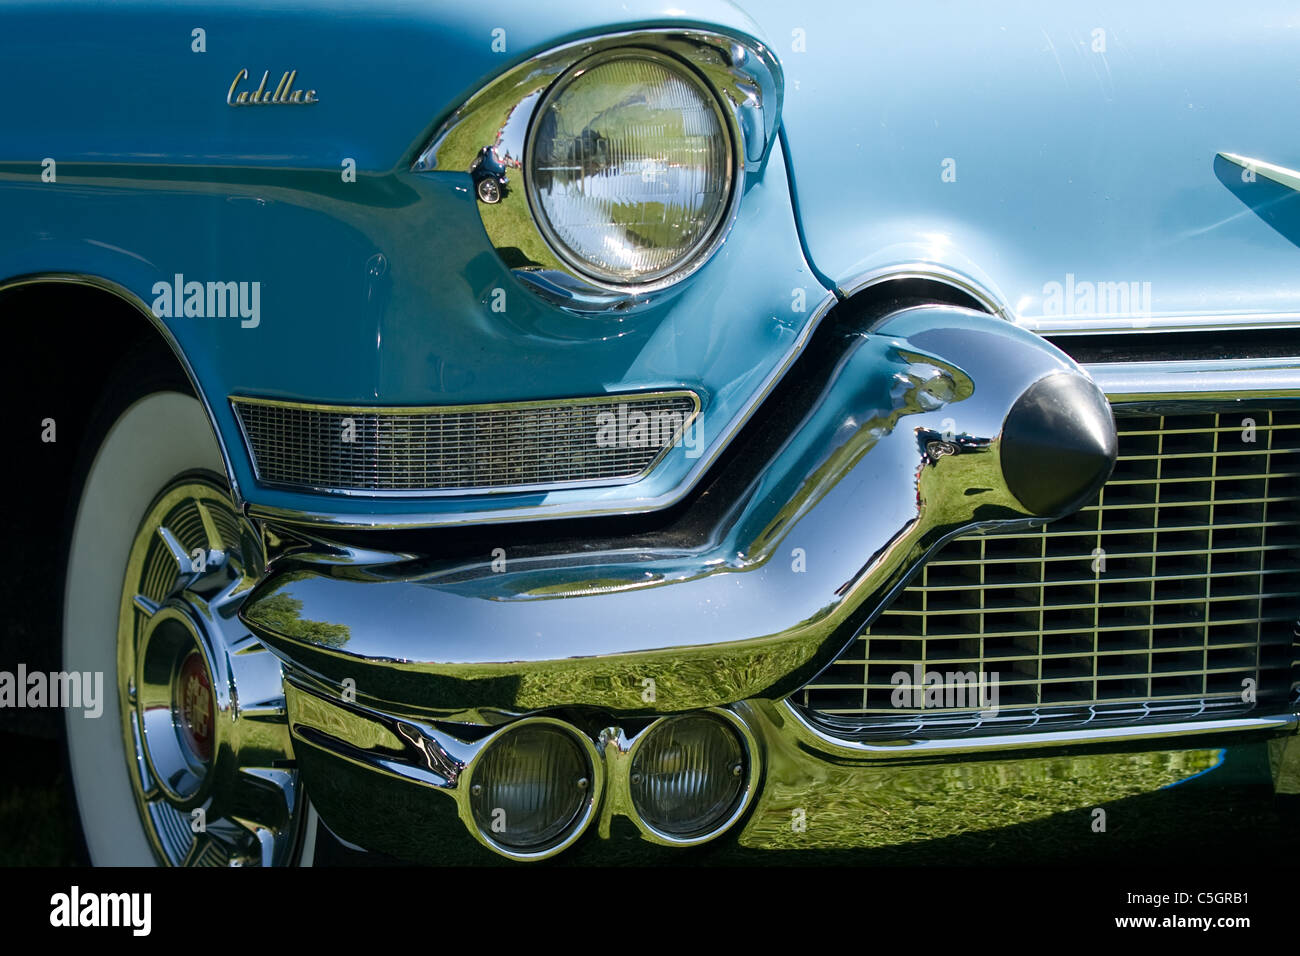 Die front-End eines Jahrgangs Cadillac Auto. Stockfoto